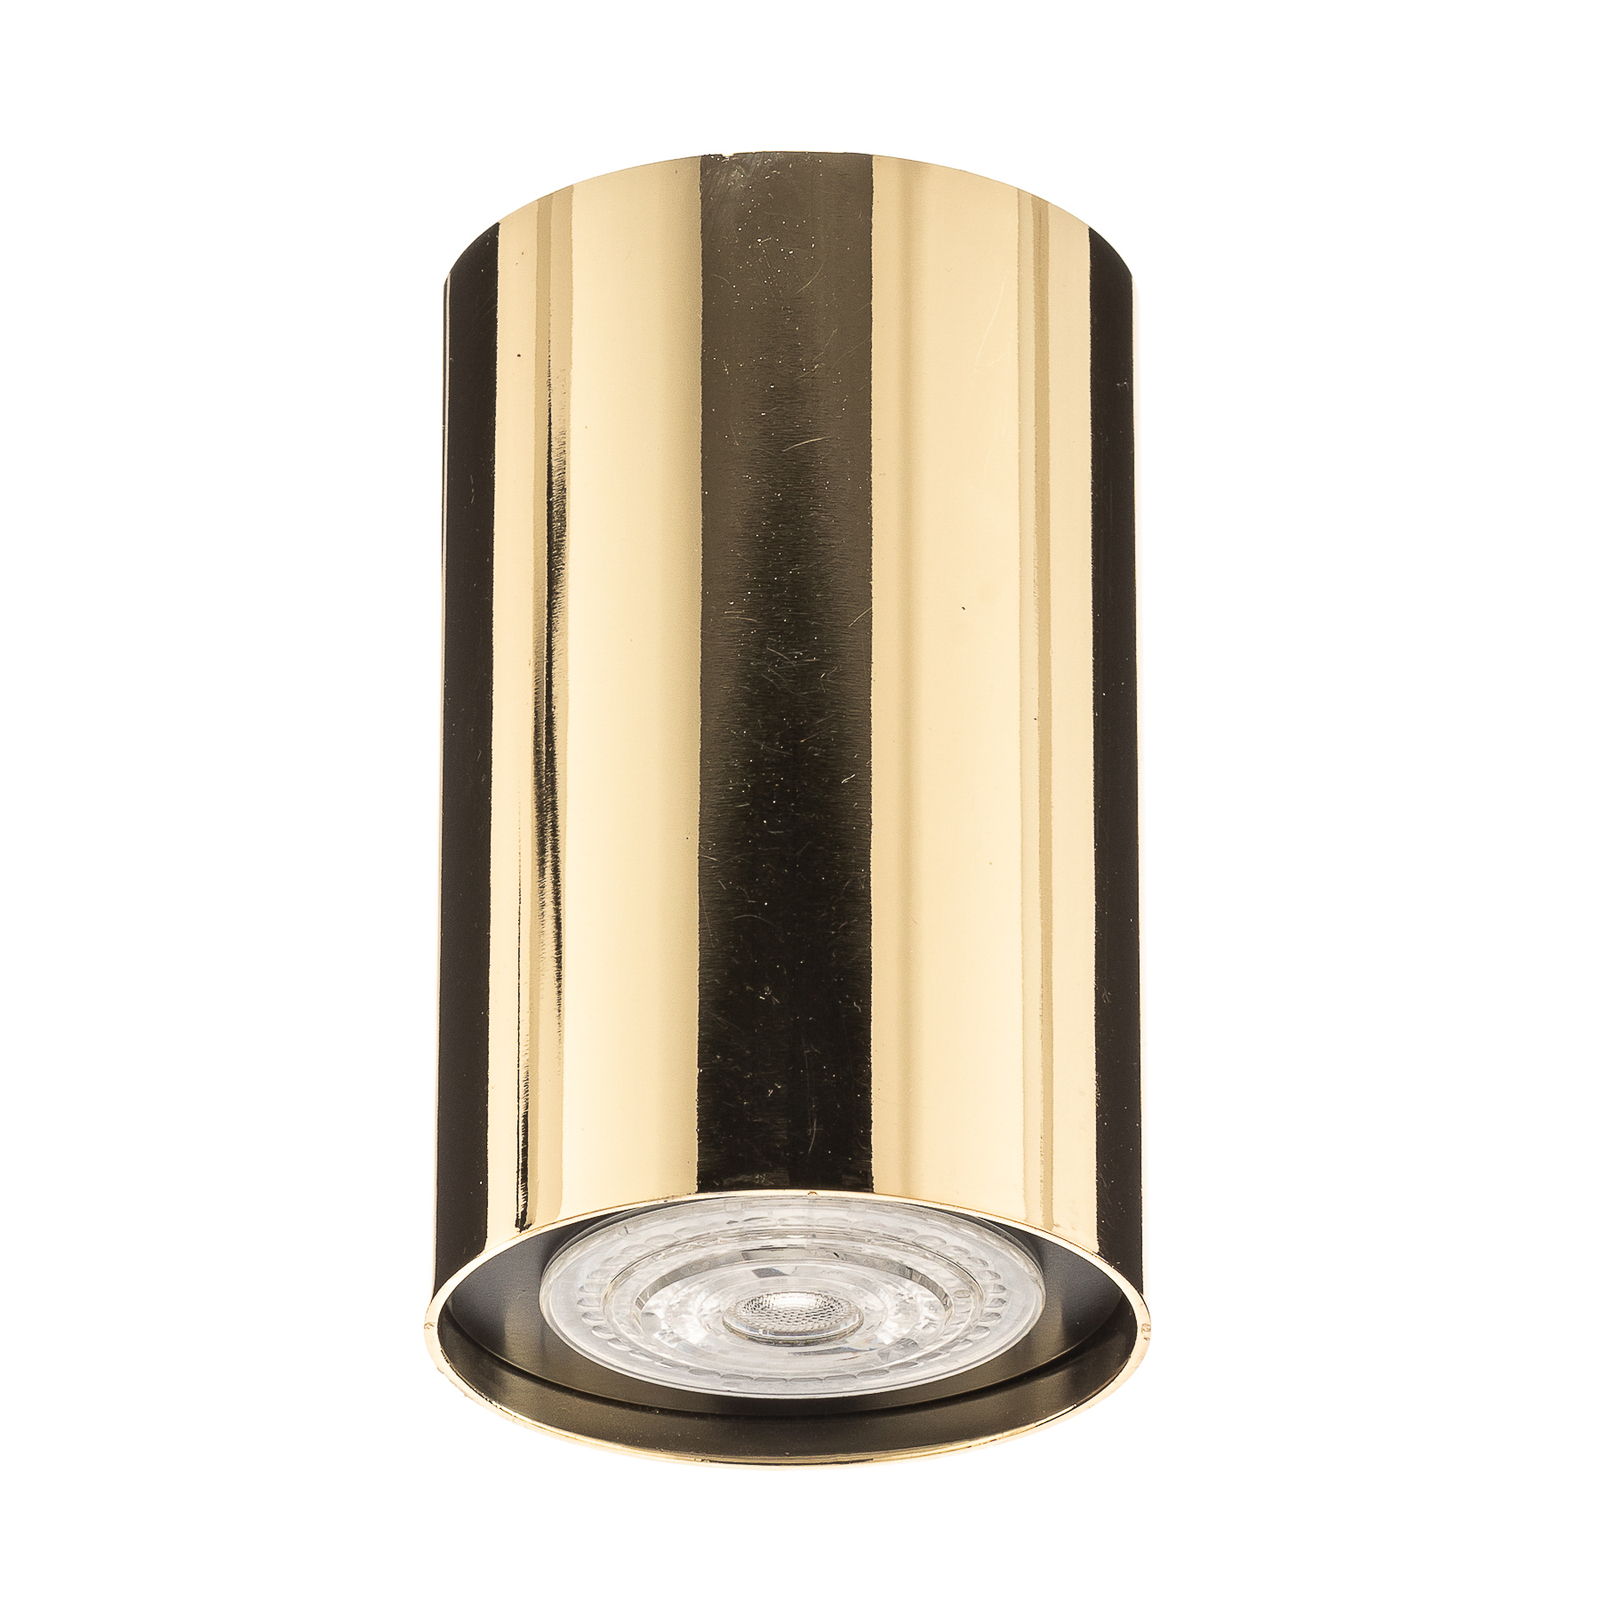 Tesa downlight, brass, height 11 cm